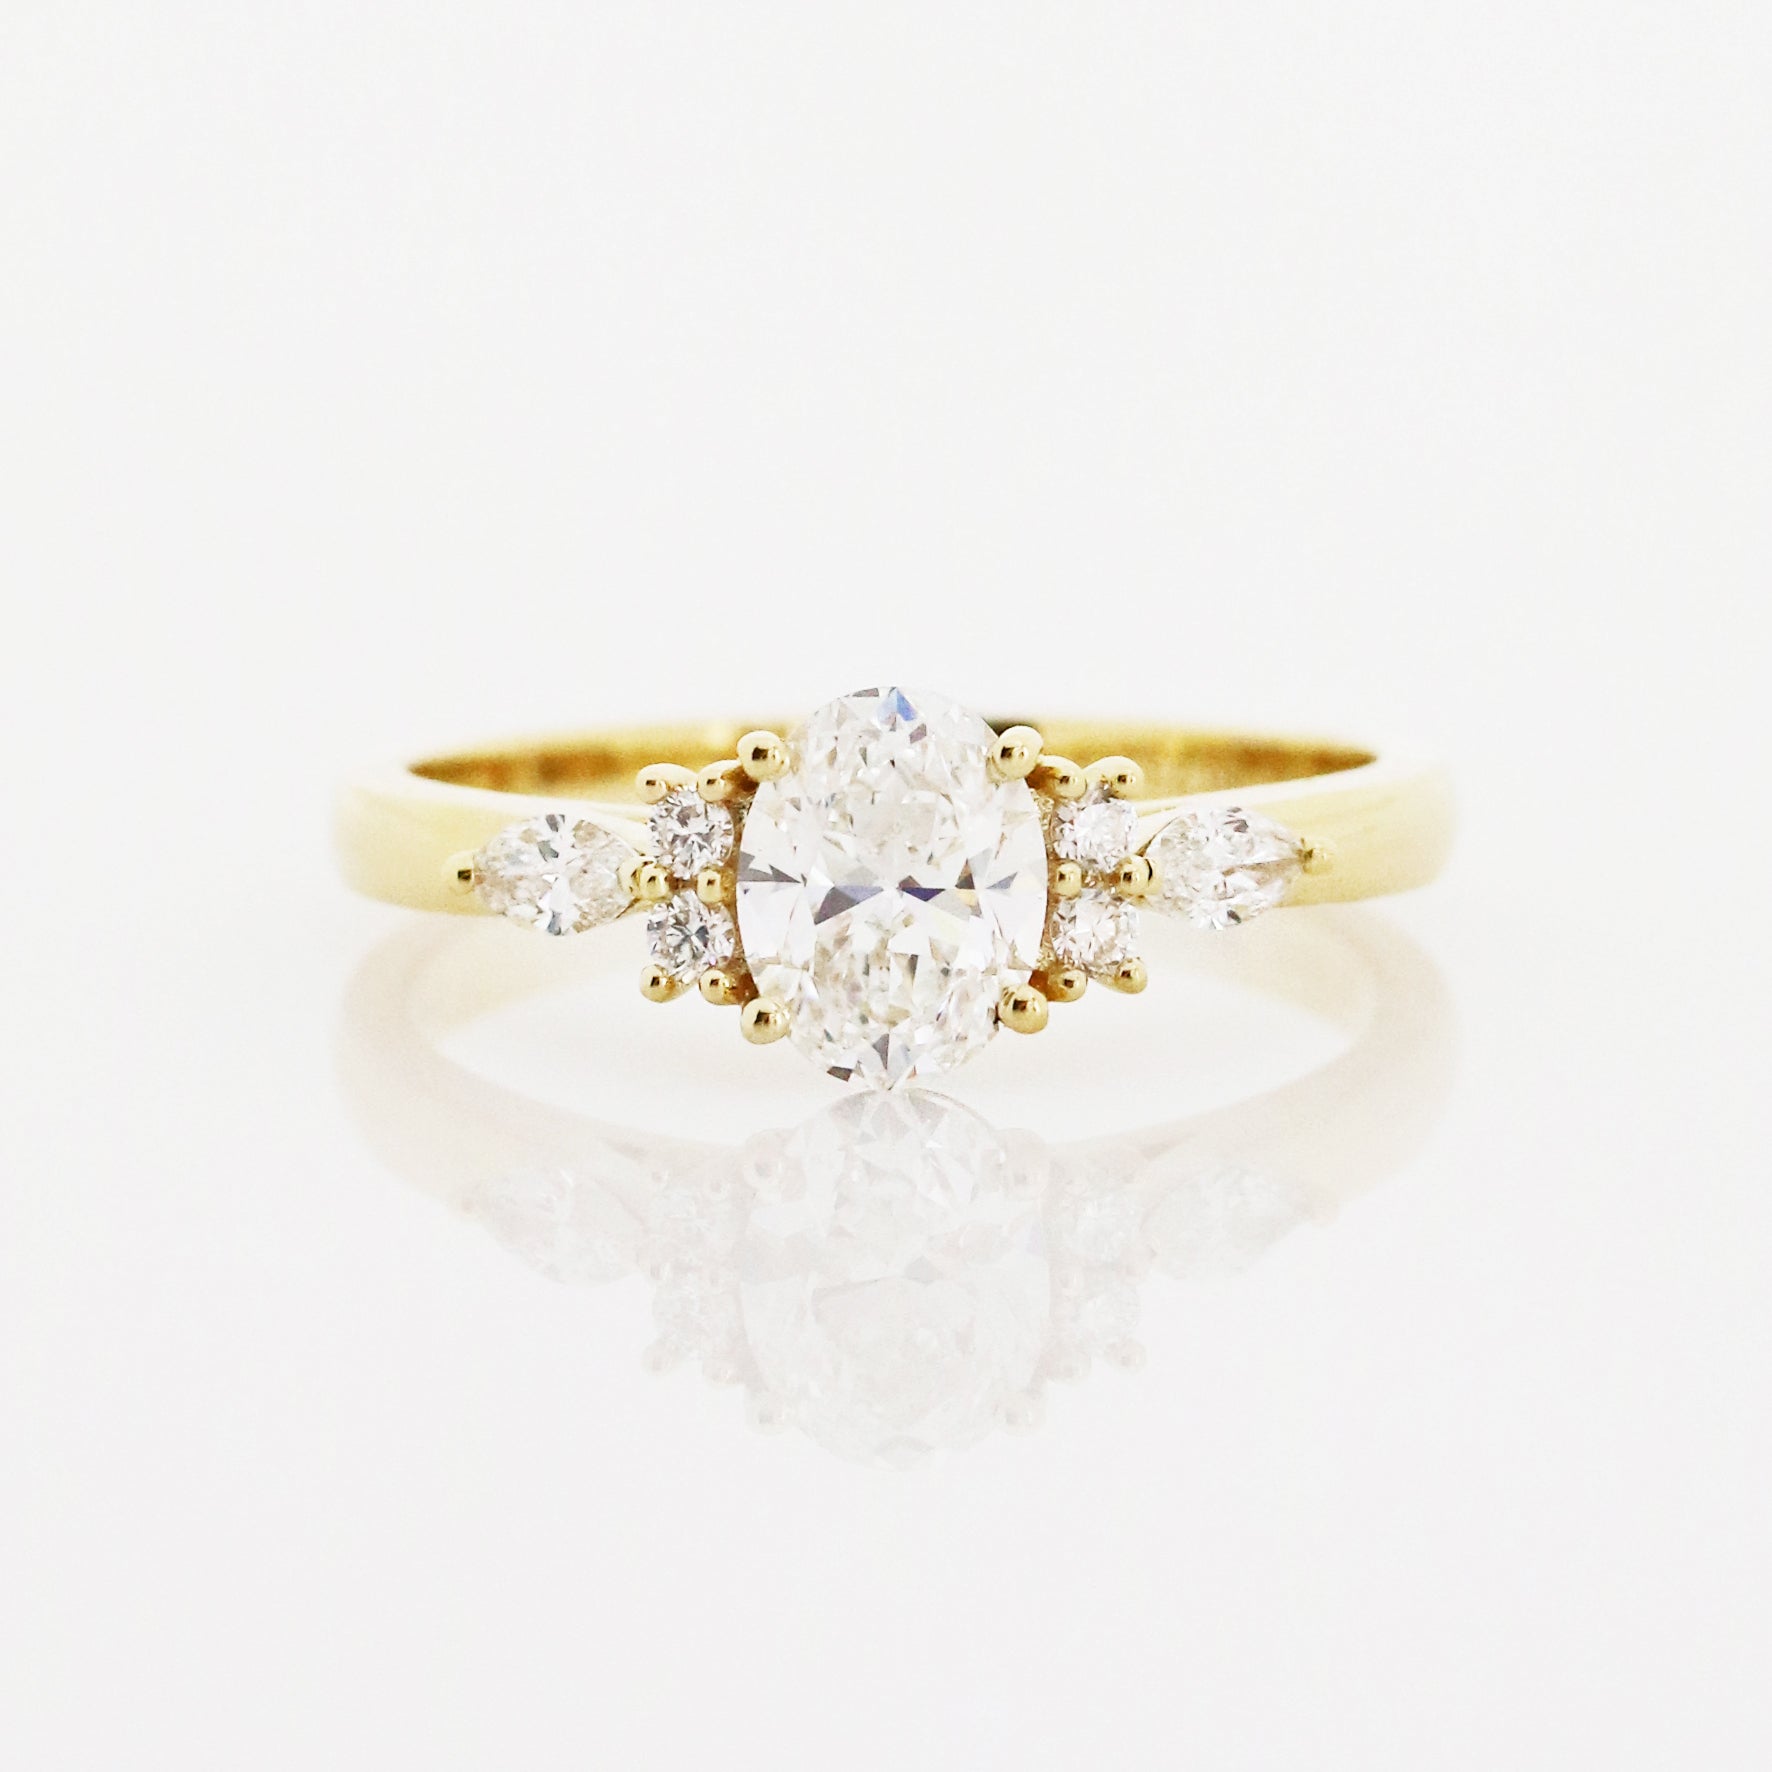 Euphorbia Vintage 18k Yellow Gold 4-Prong Oval Diamond Engagement Ring Setting 18k黃金四爪復古求婚鑽石戒指款式